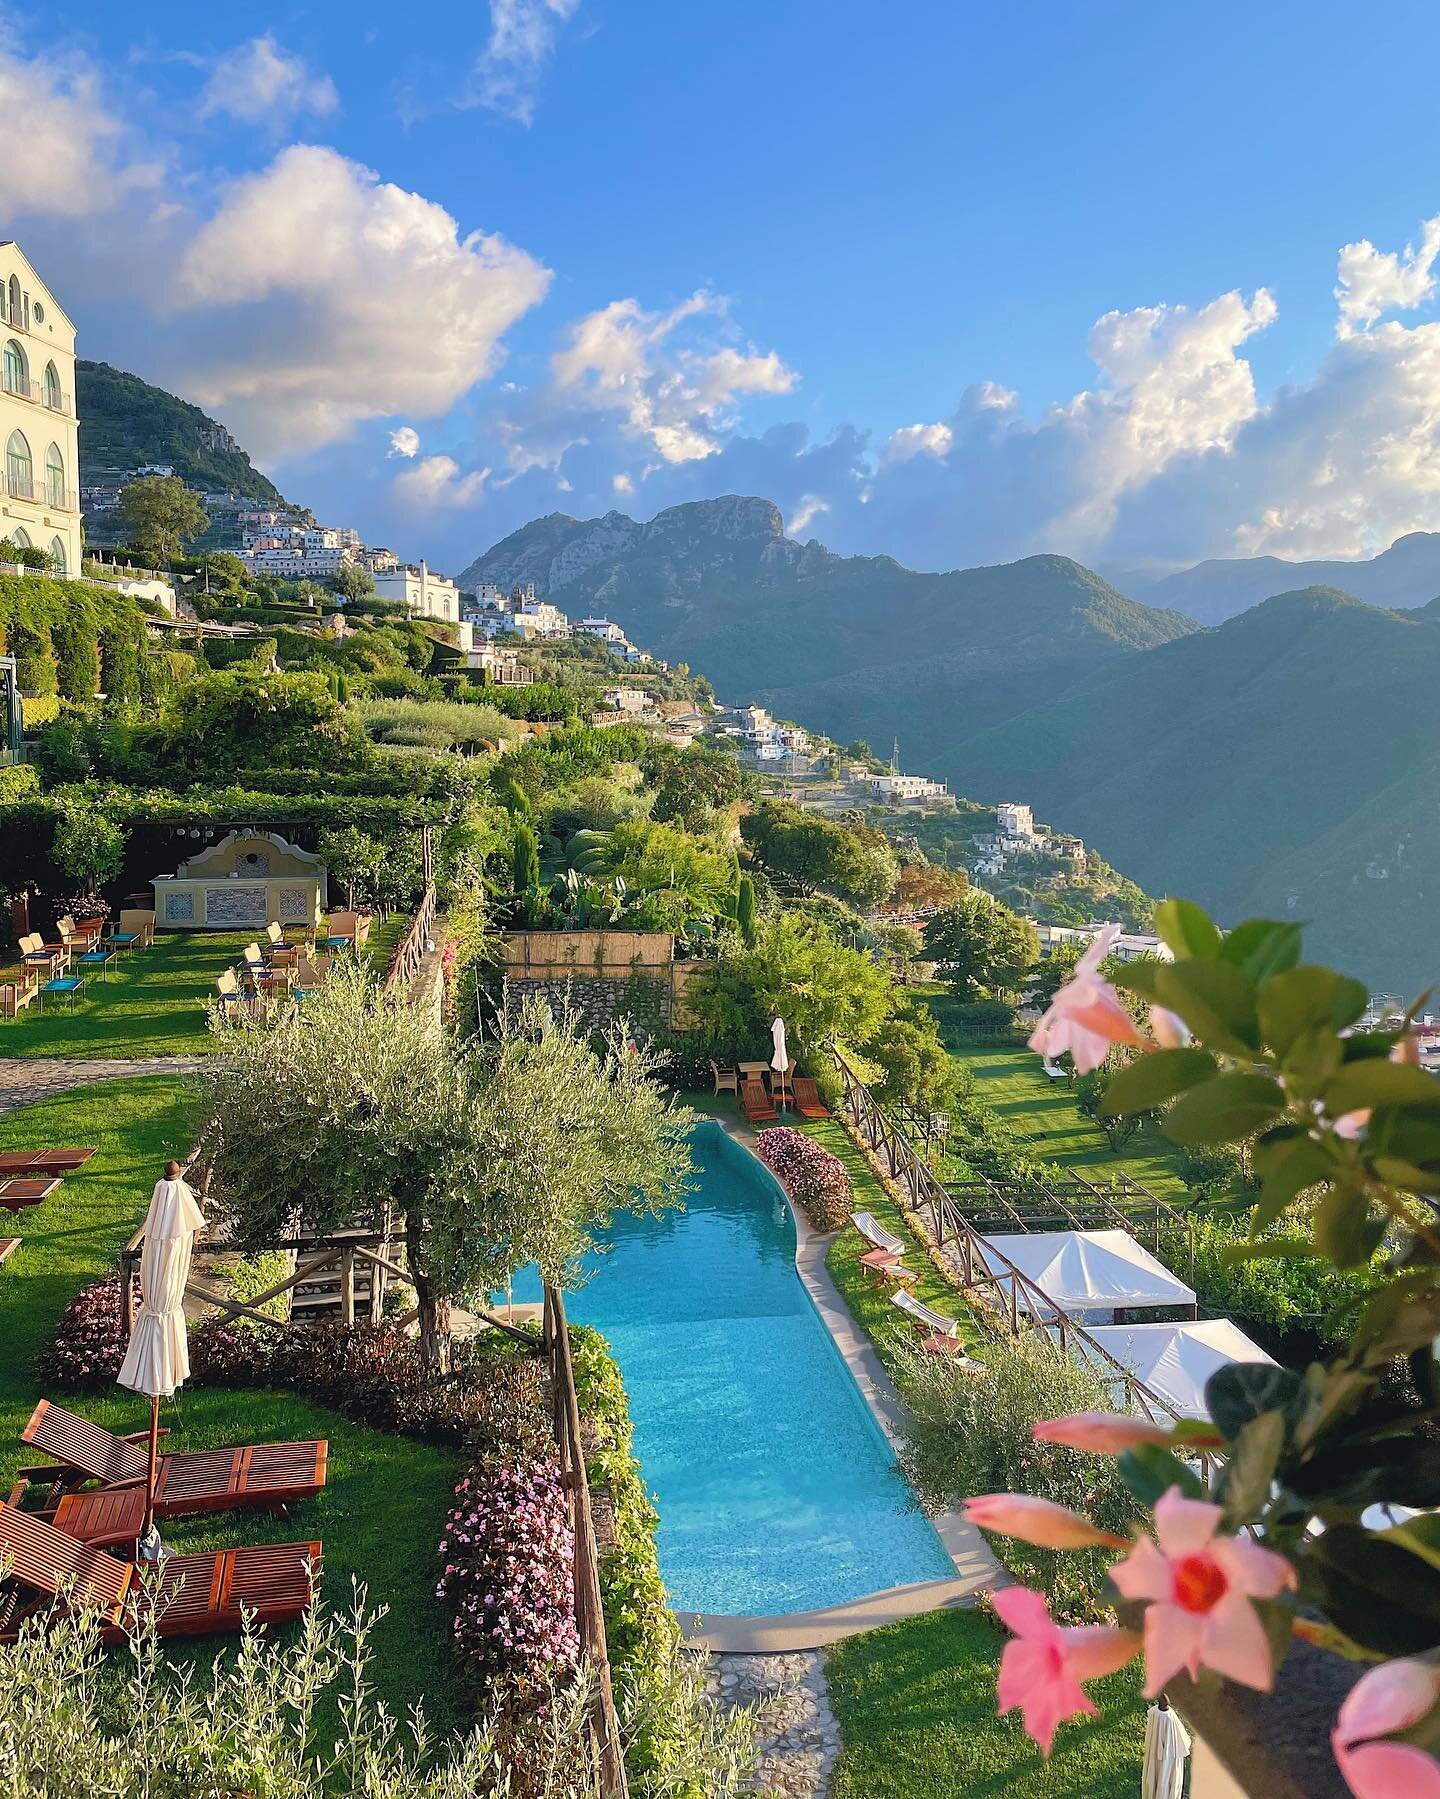 Italian glamour ft one of the best hotels in the Amalfi Coast 🇮🇹 @palazzoavino